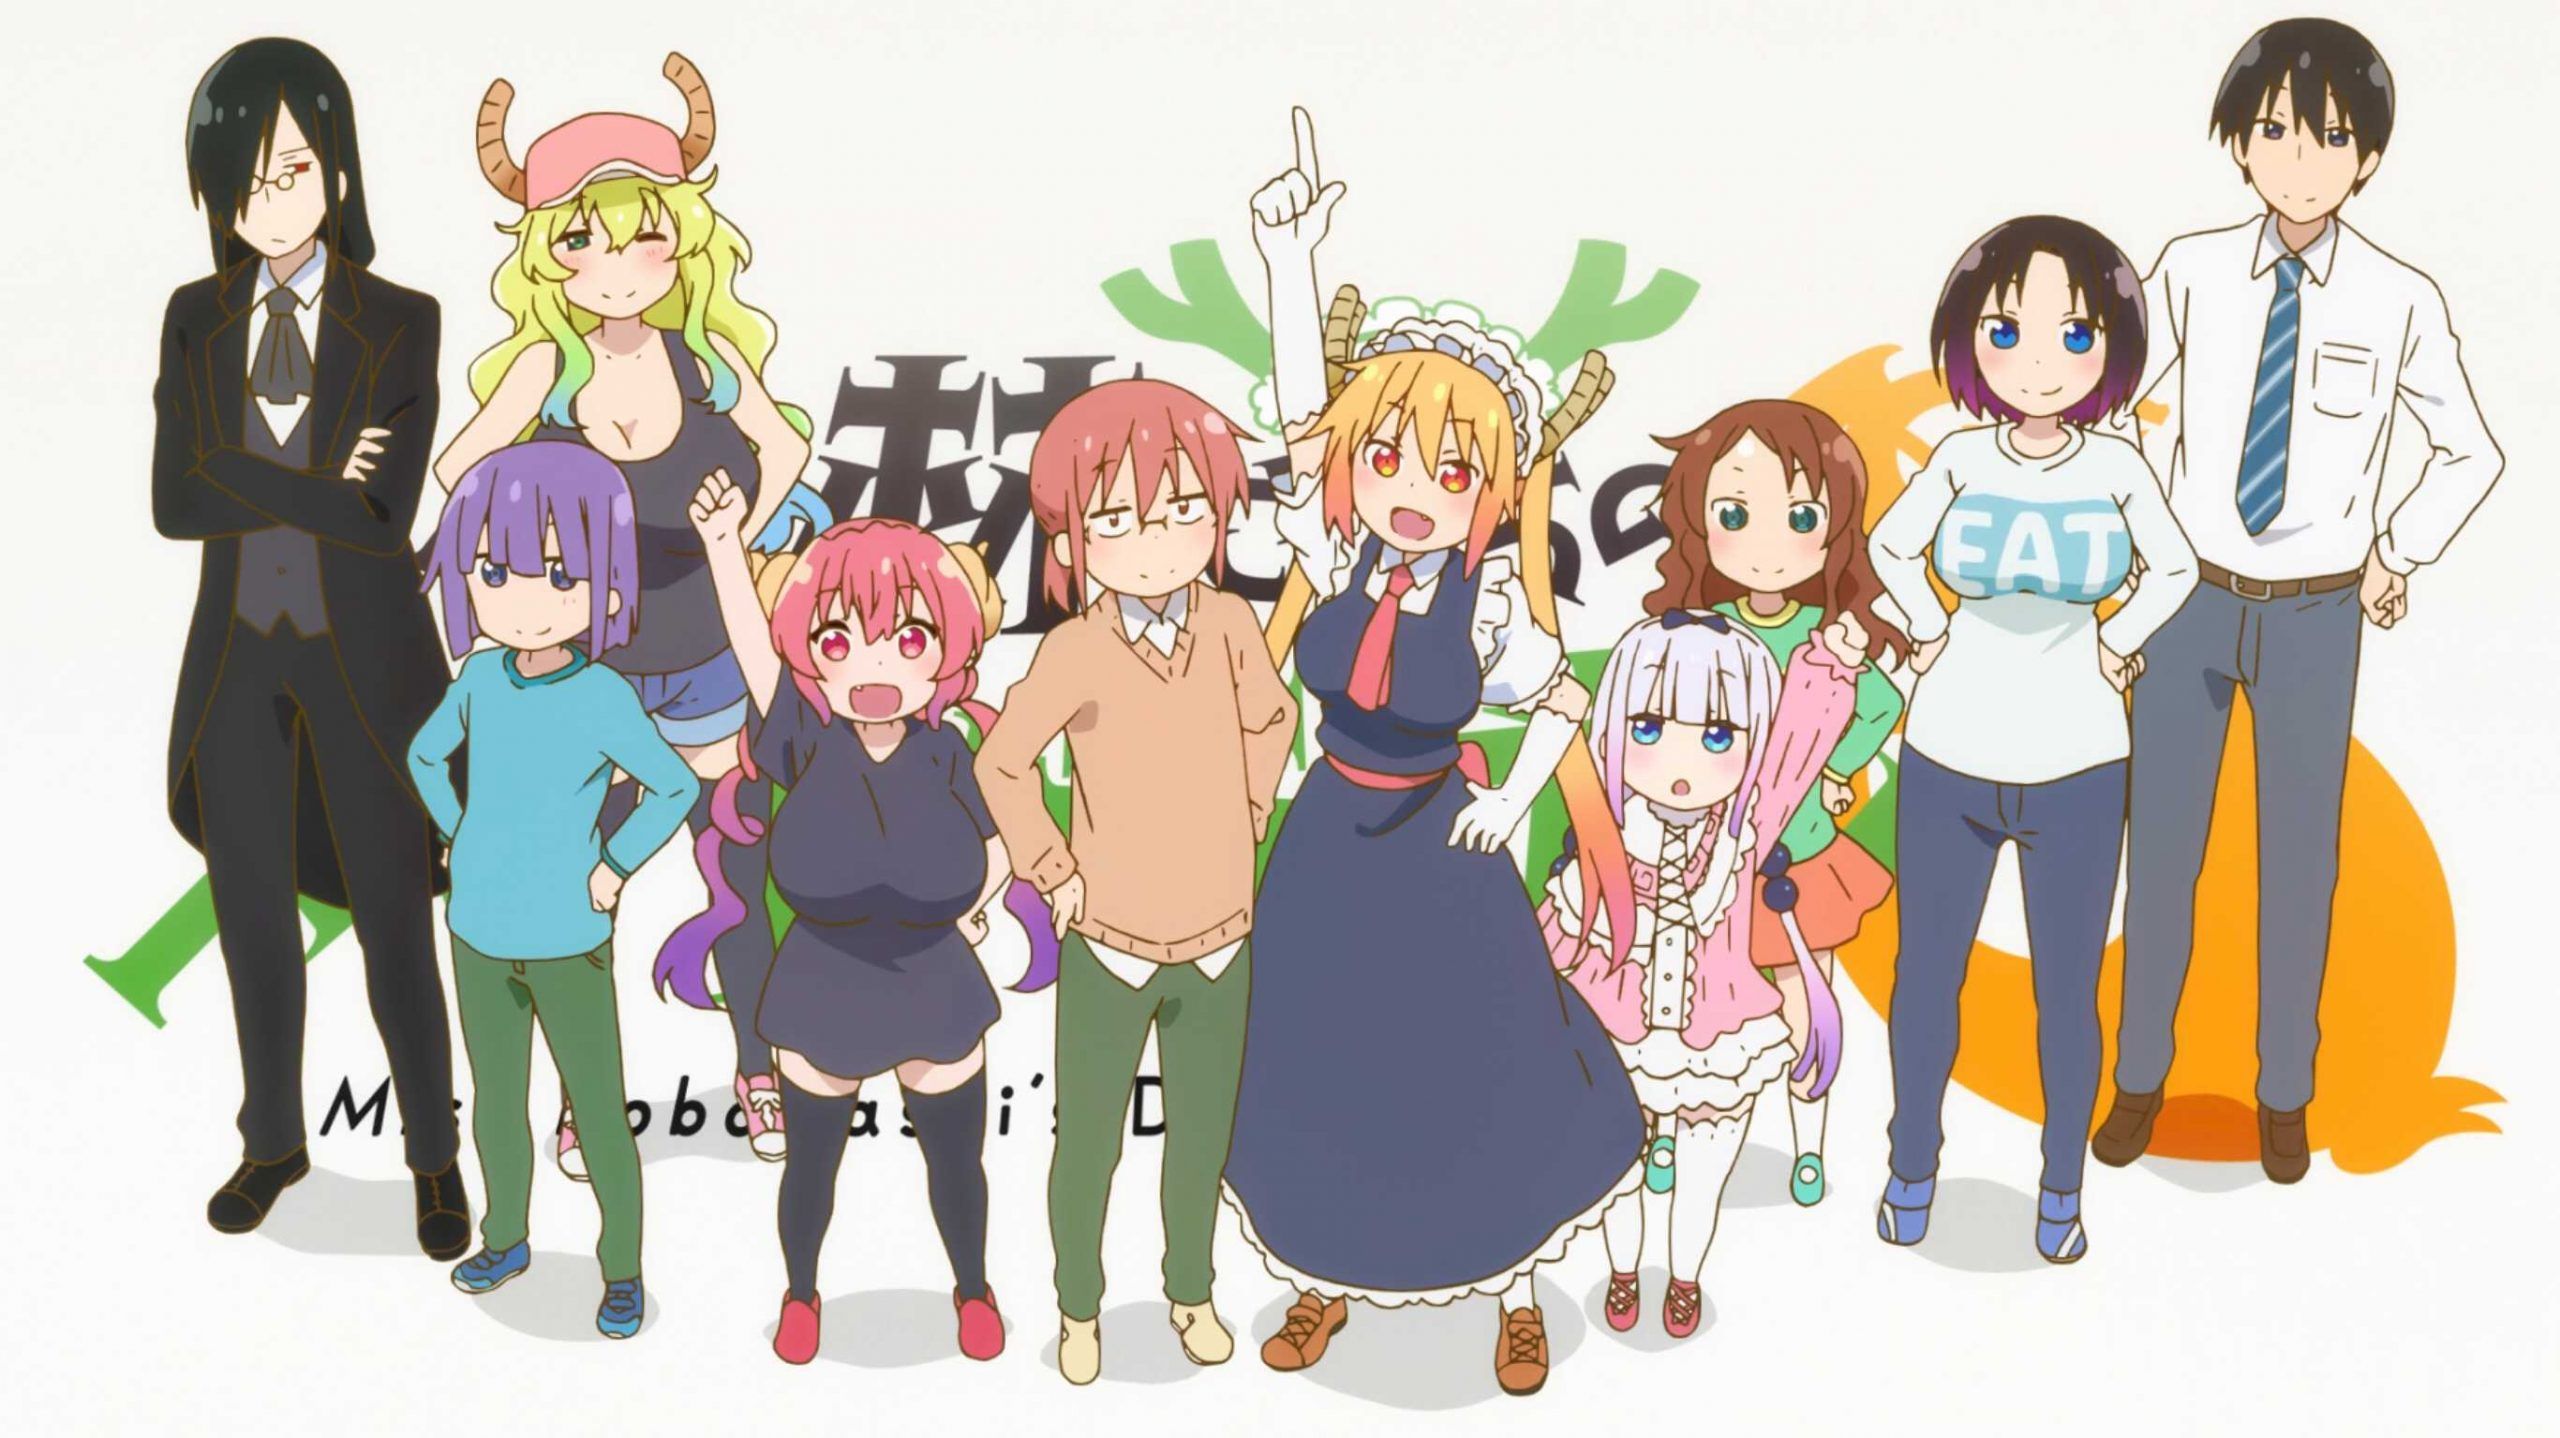 Kobayashi and the main cast